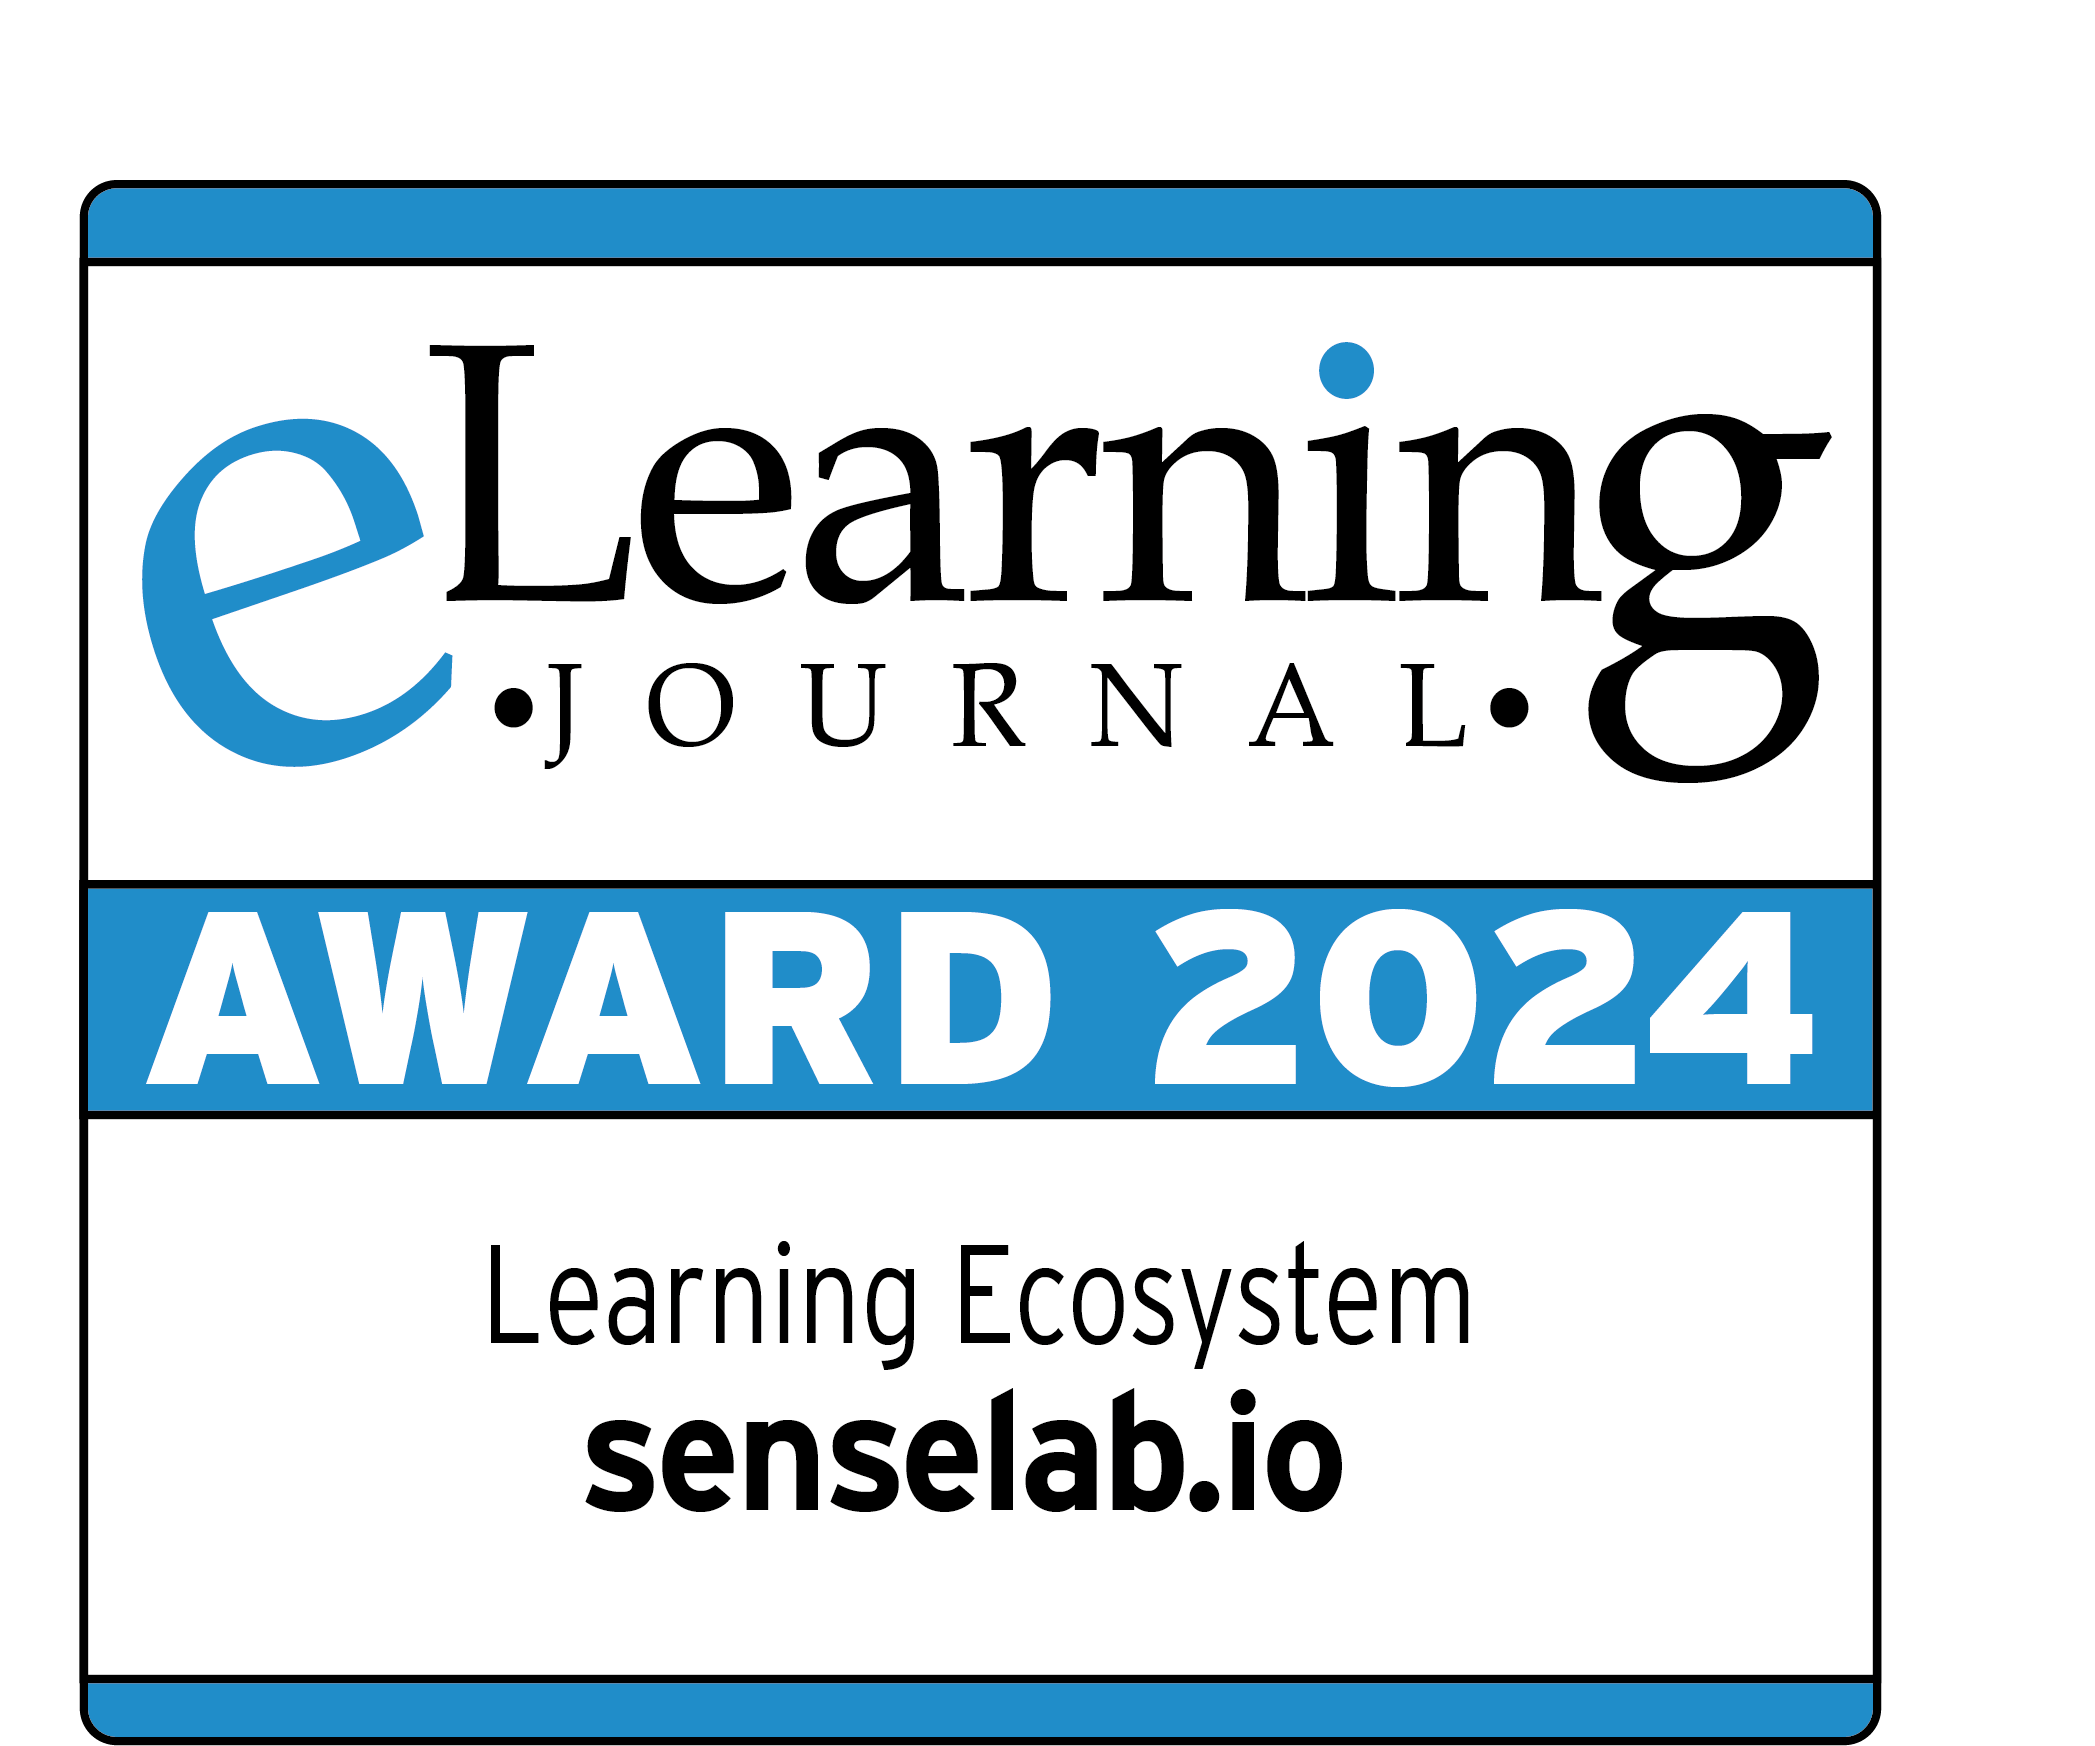 eLJ_AWARD2024_Learning_Ecosystem_senselab